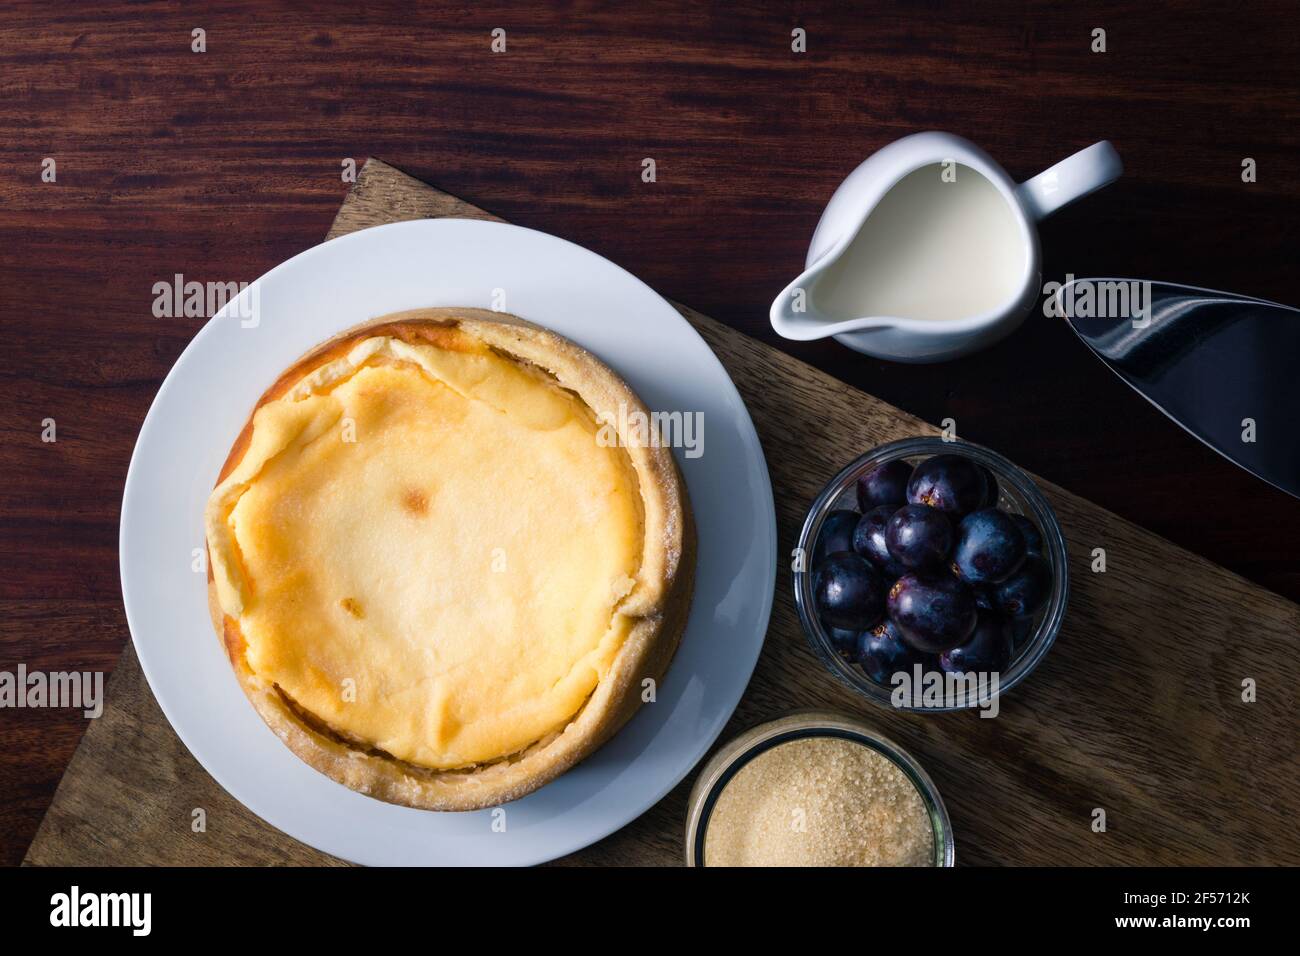 Grandma's cheesecake besides grapes and cane sugar on dark wooden board Stock Photo